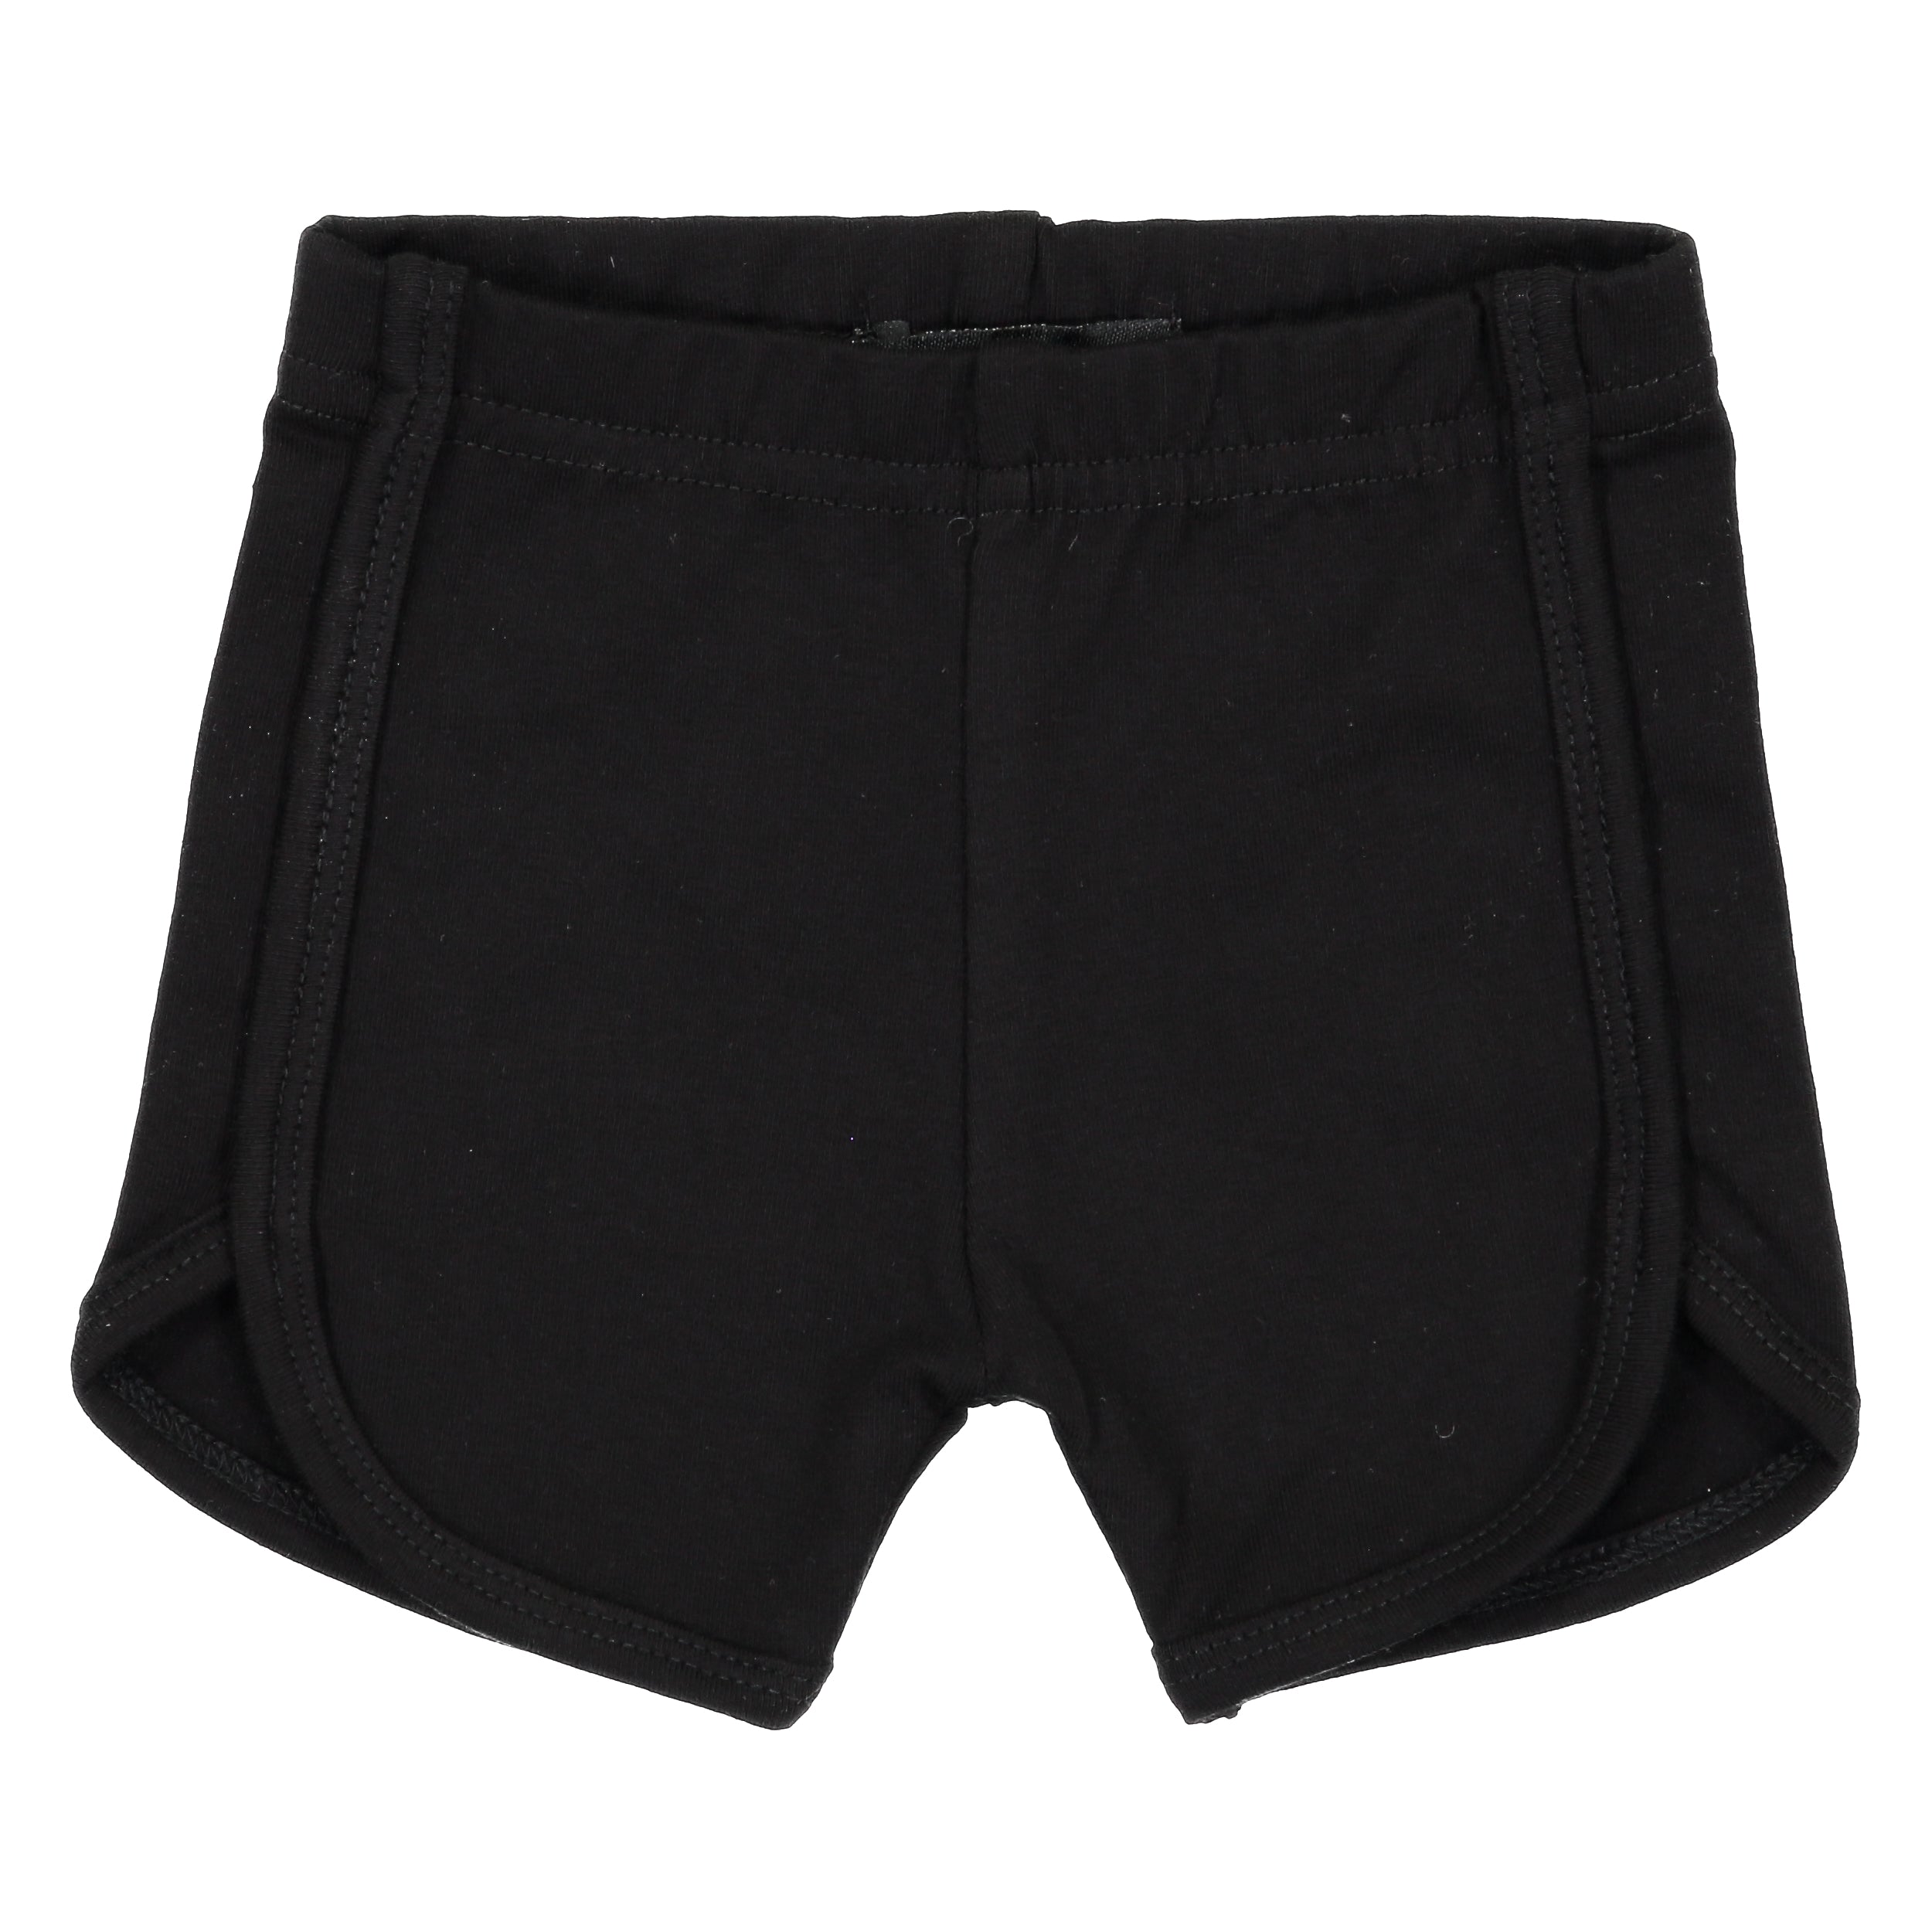 Noggi Black Sport Shorts